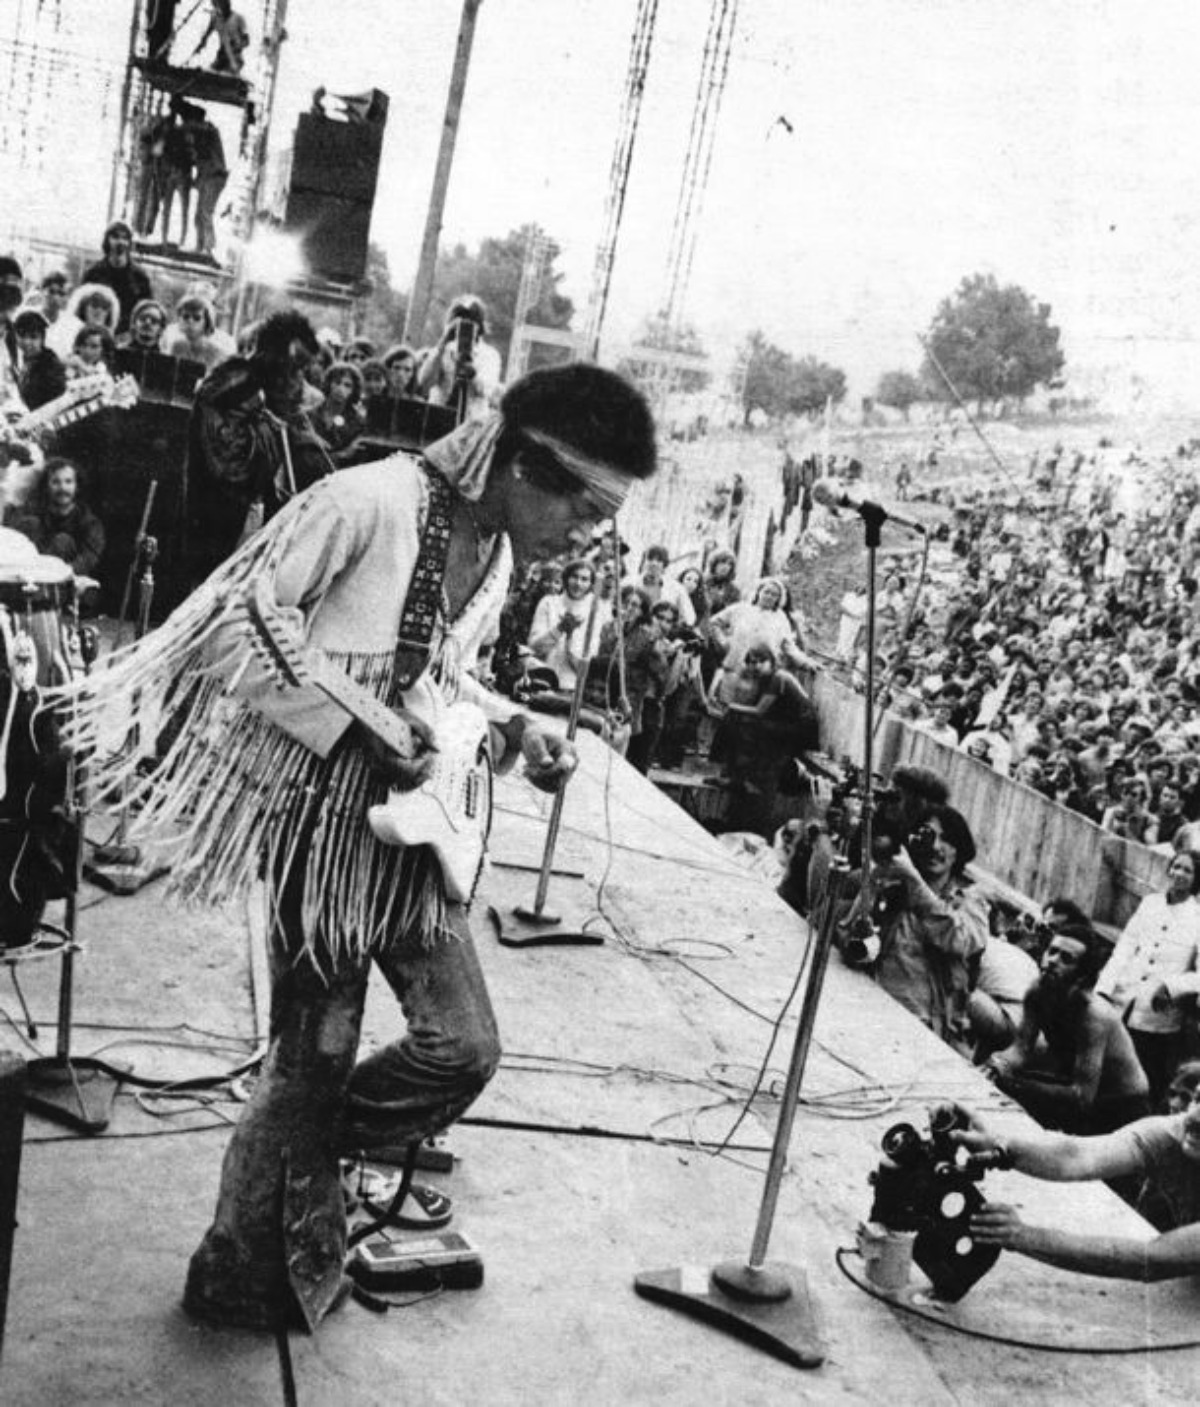 Jimi Hendrix, Woodstock, 1969